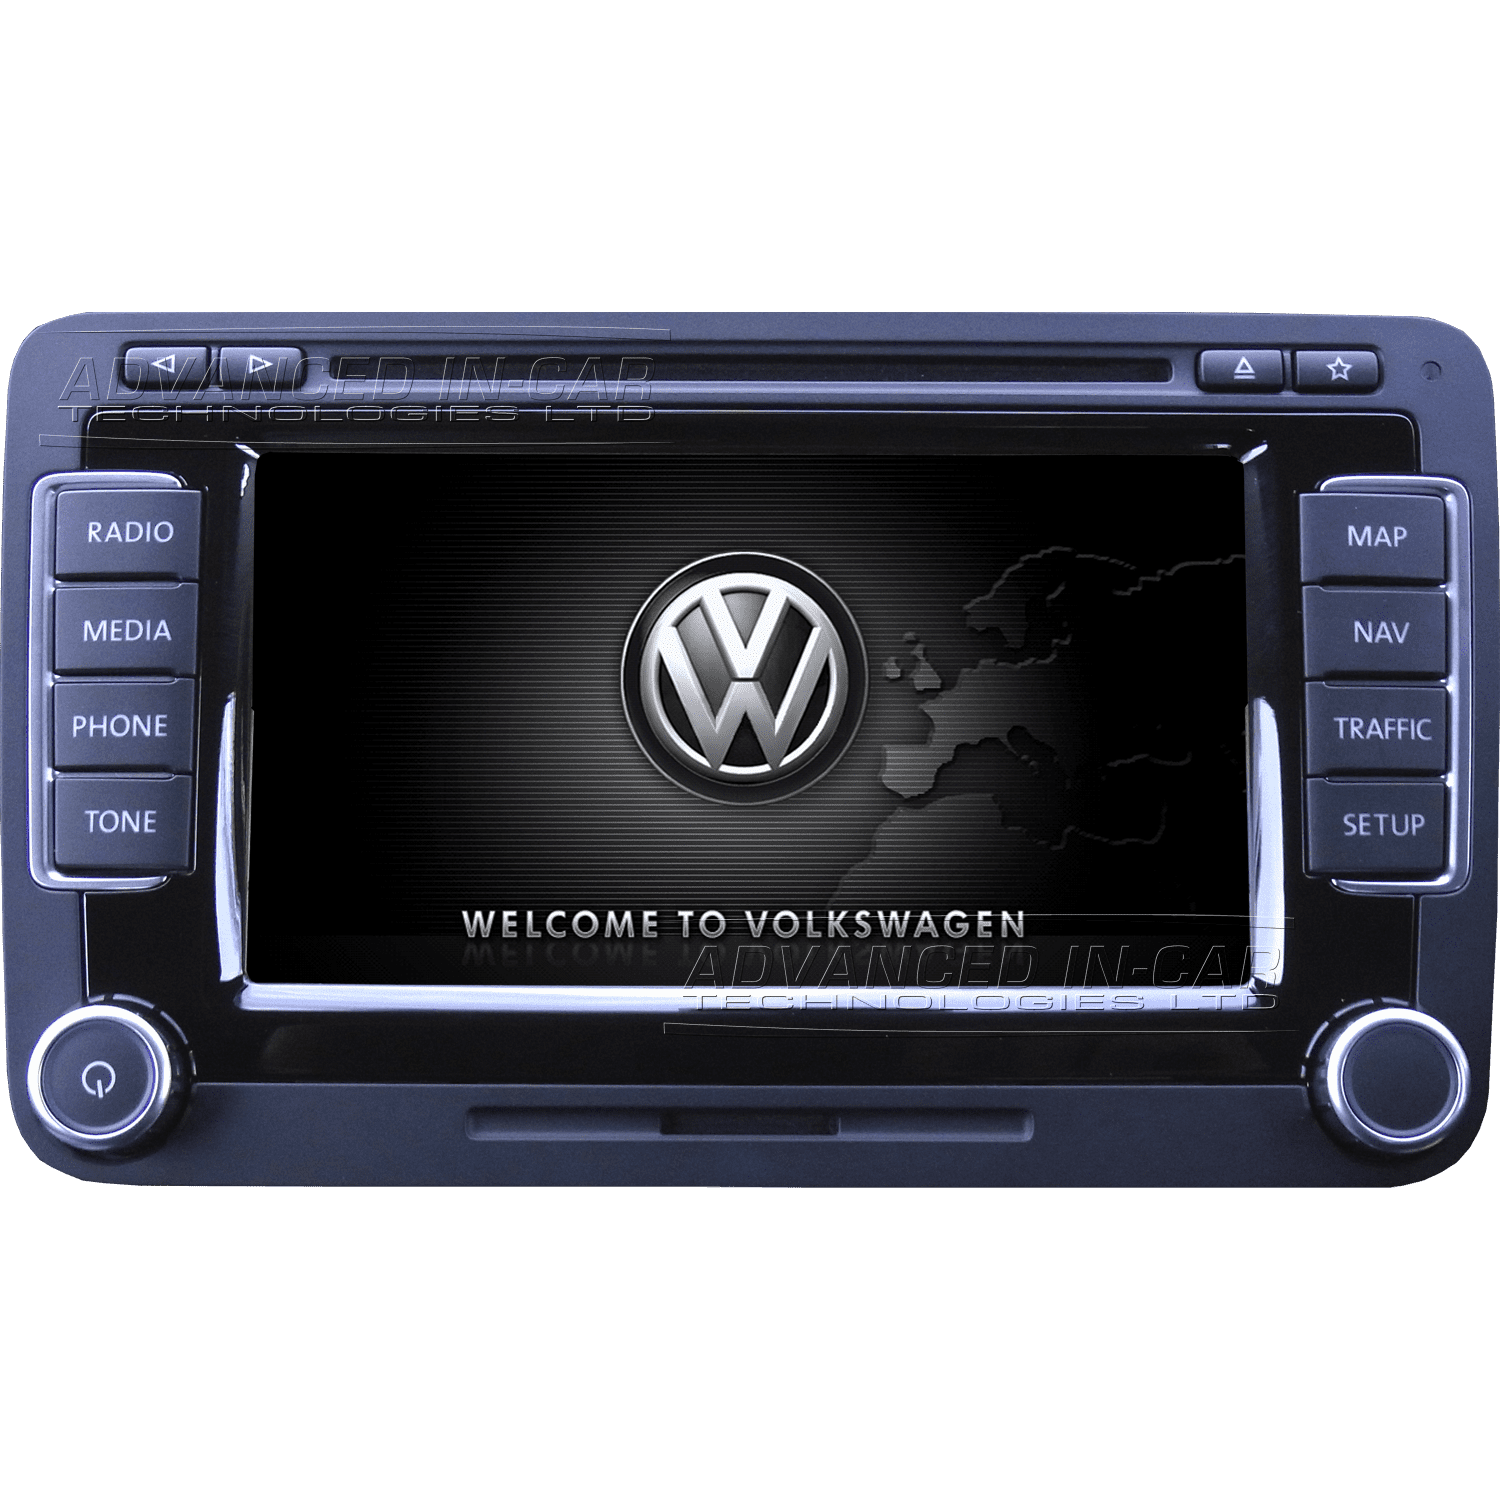 Volkswagen VW RNS 510 Sat Nav Retrofit Advanced In Car